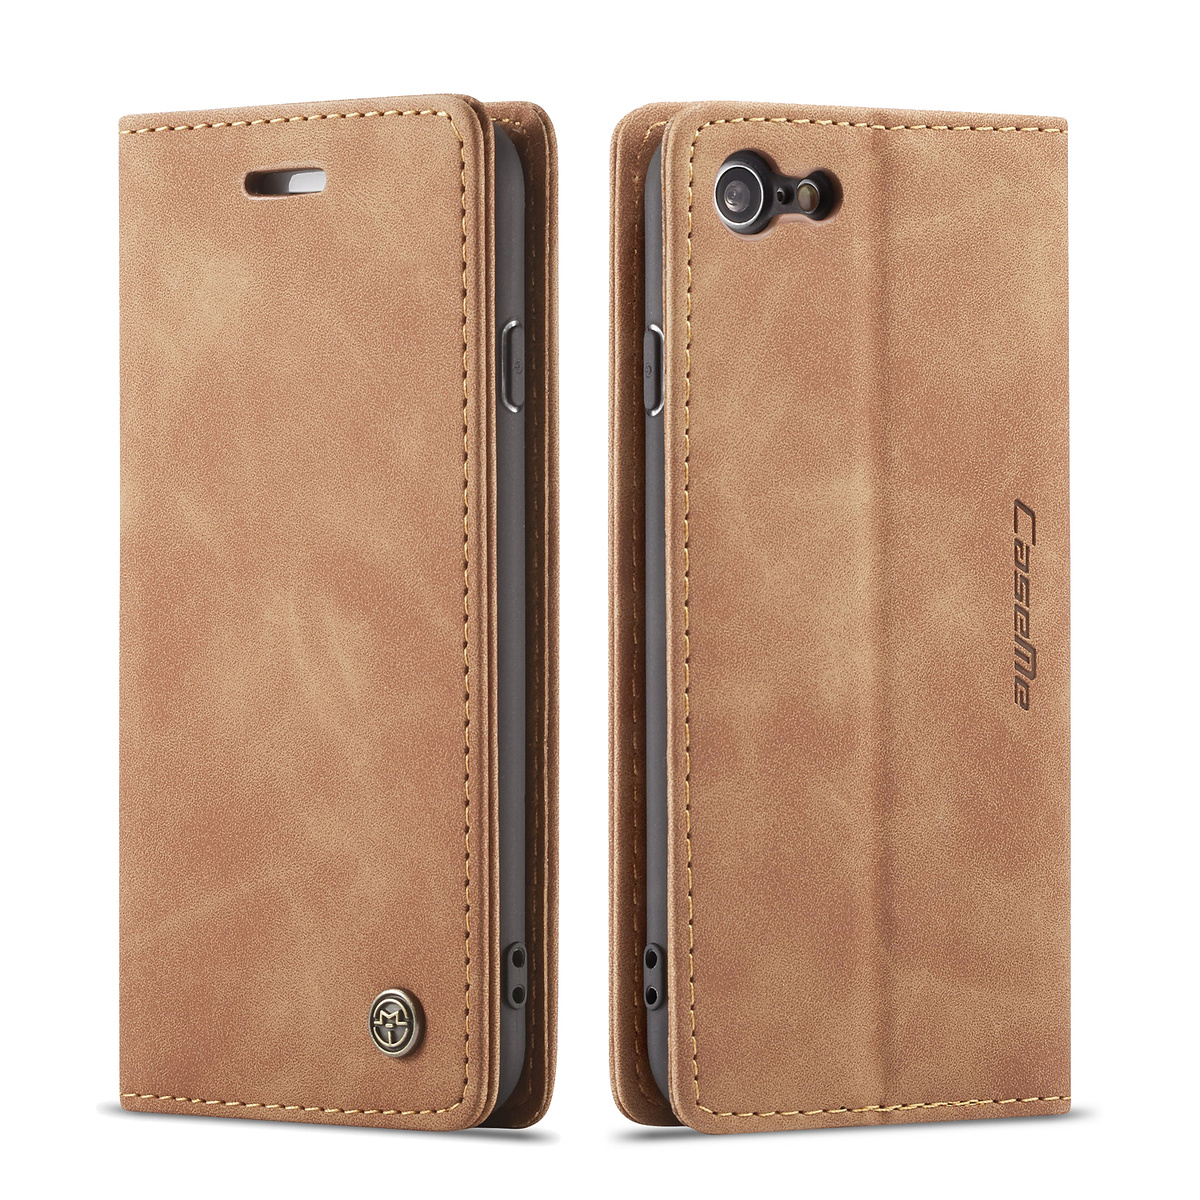 CaseMe plånboksfodral till iPhone 8/7, brun